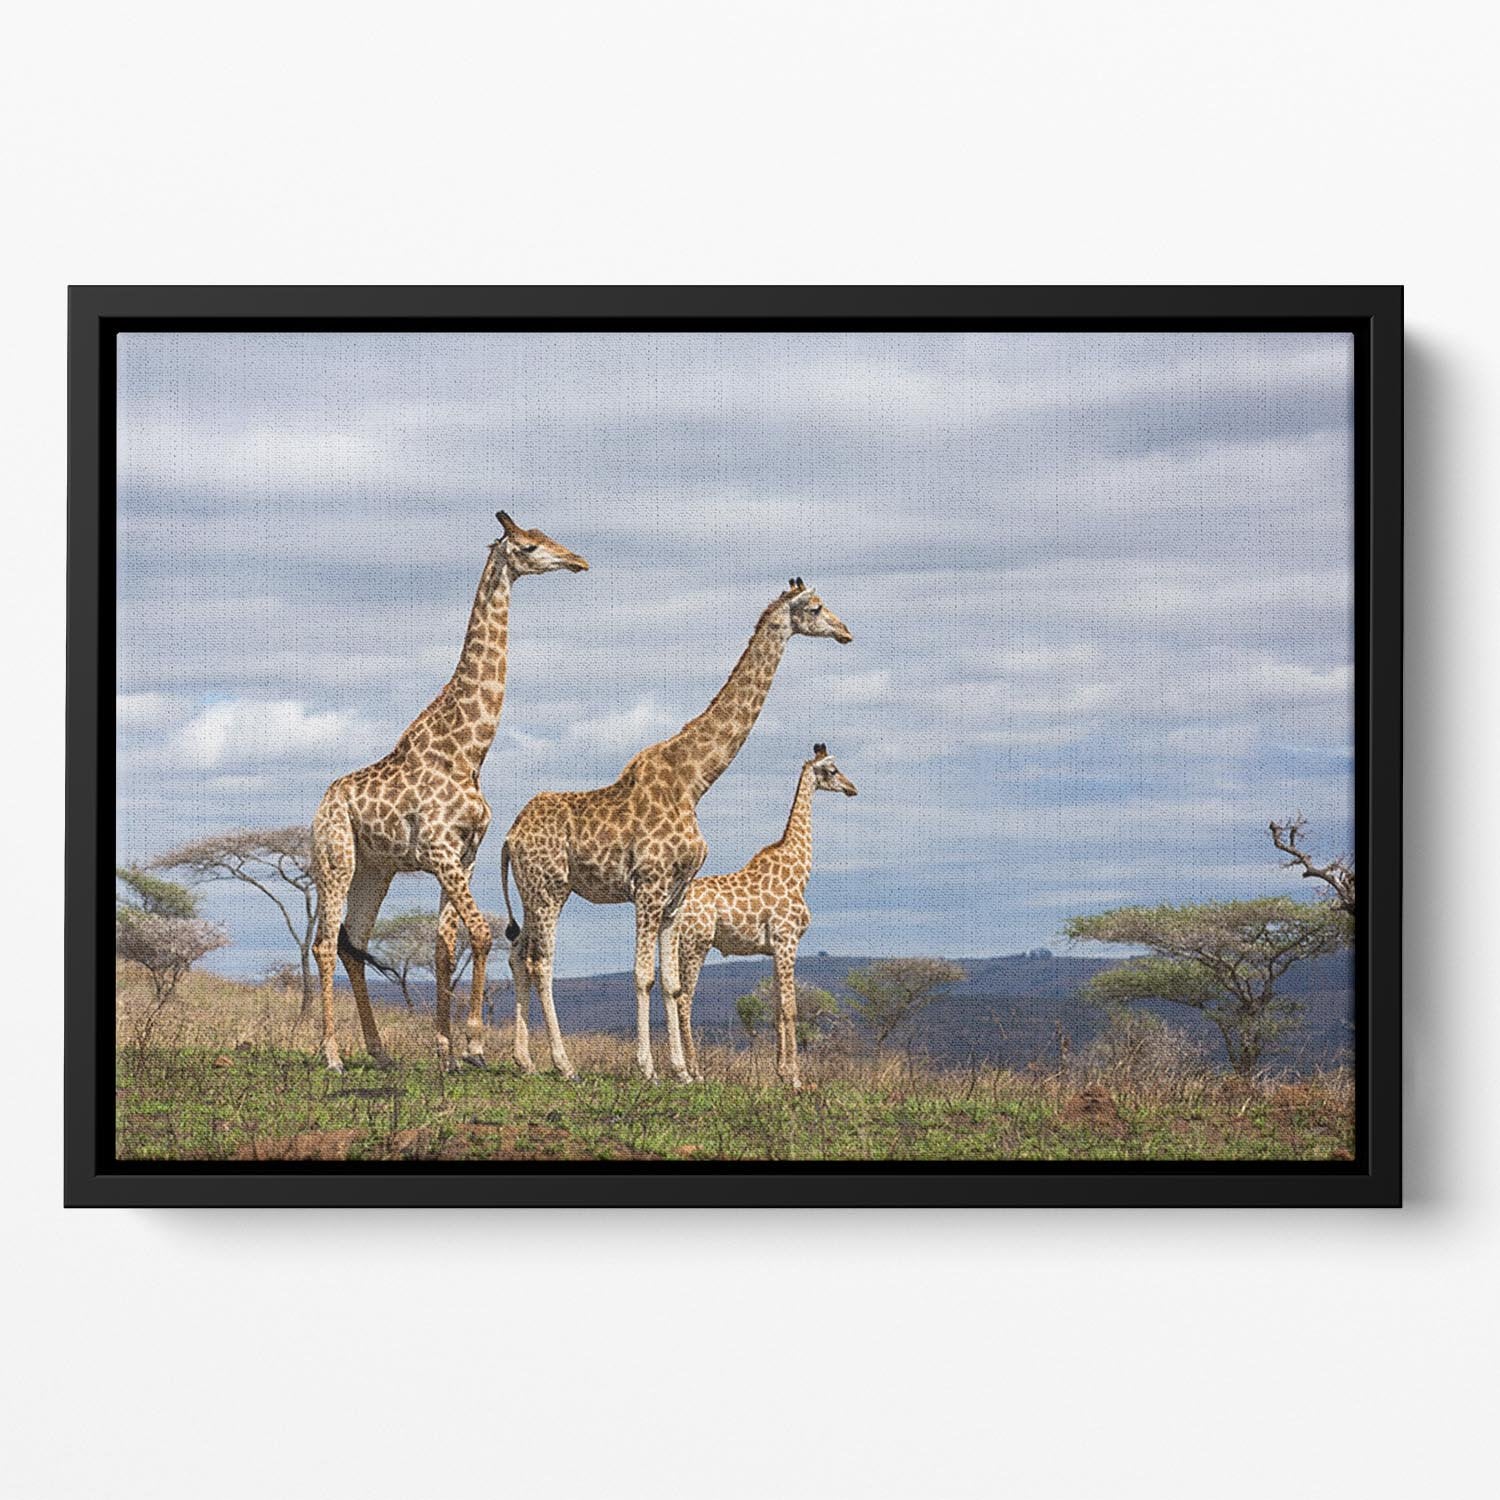 Giraffes in south africa game reserve Floating Framed Canvas - Canvas Art Rocks - 2